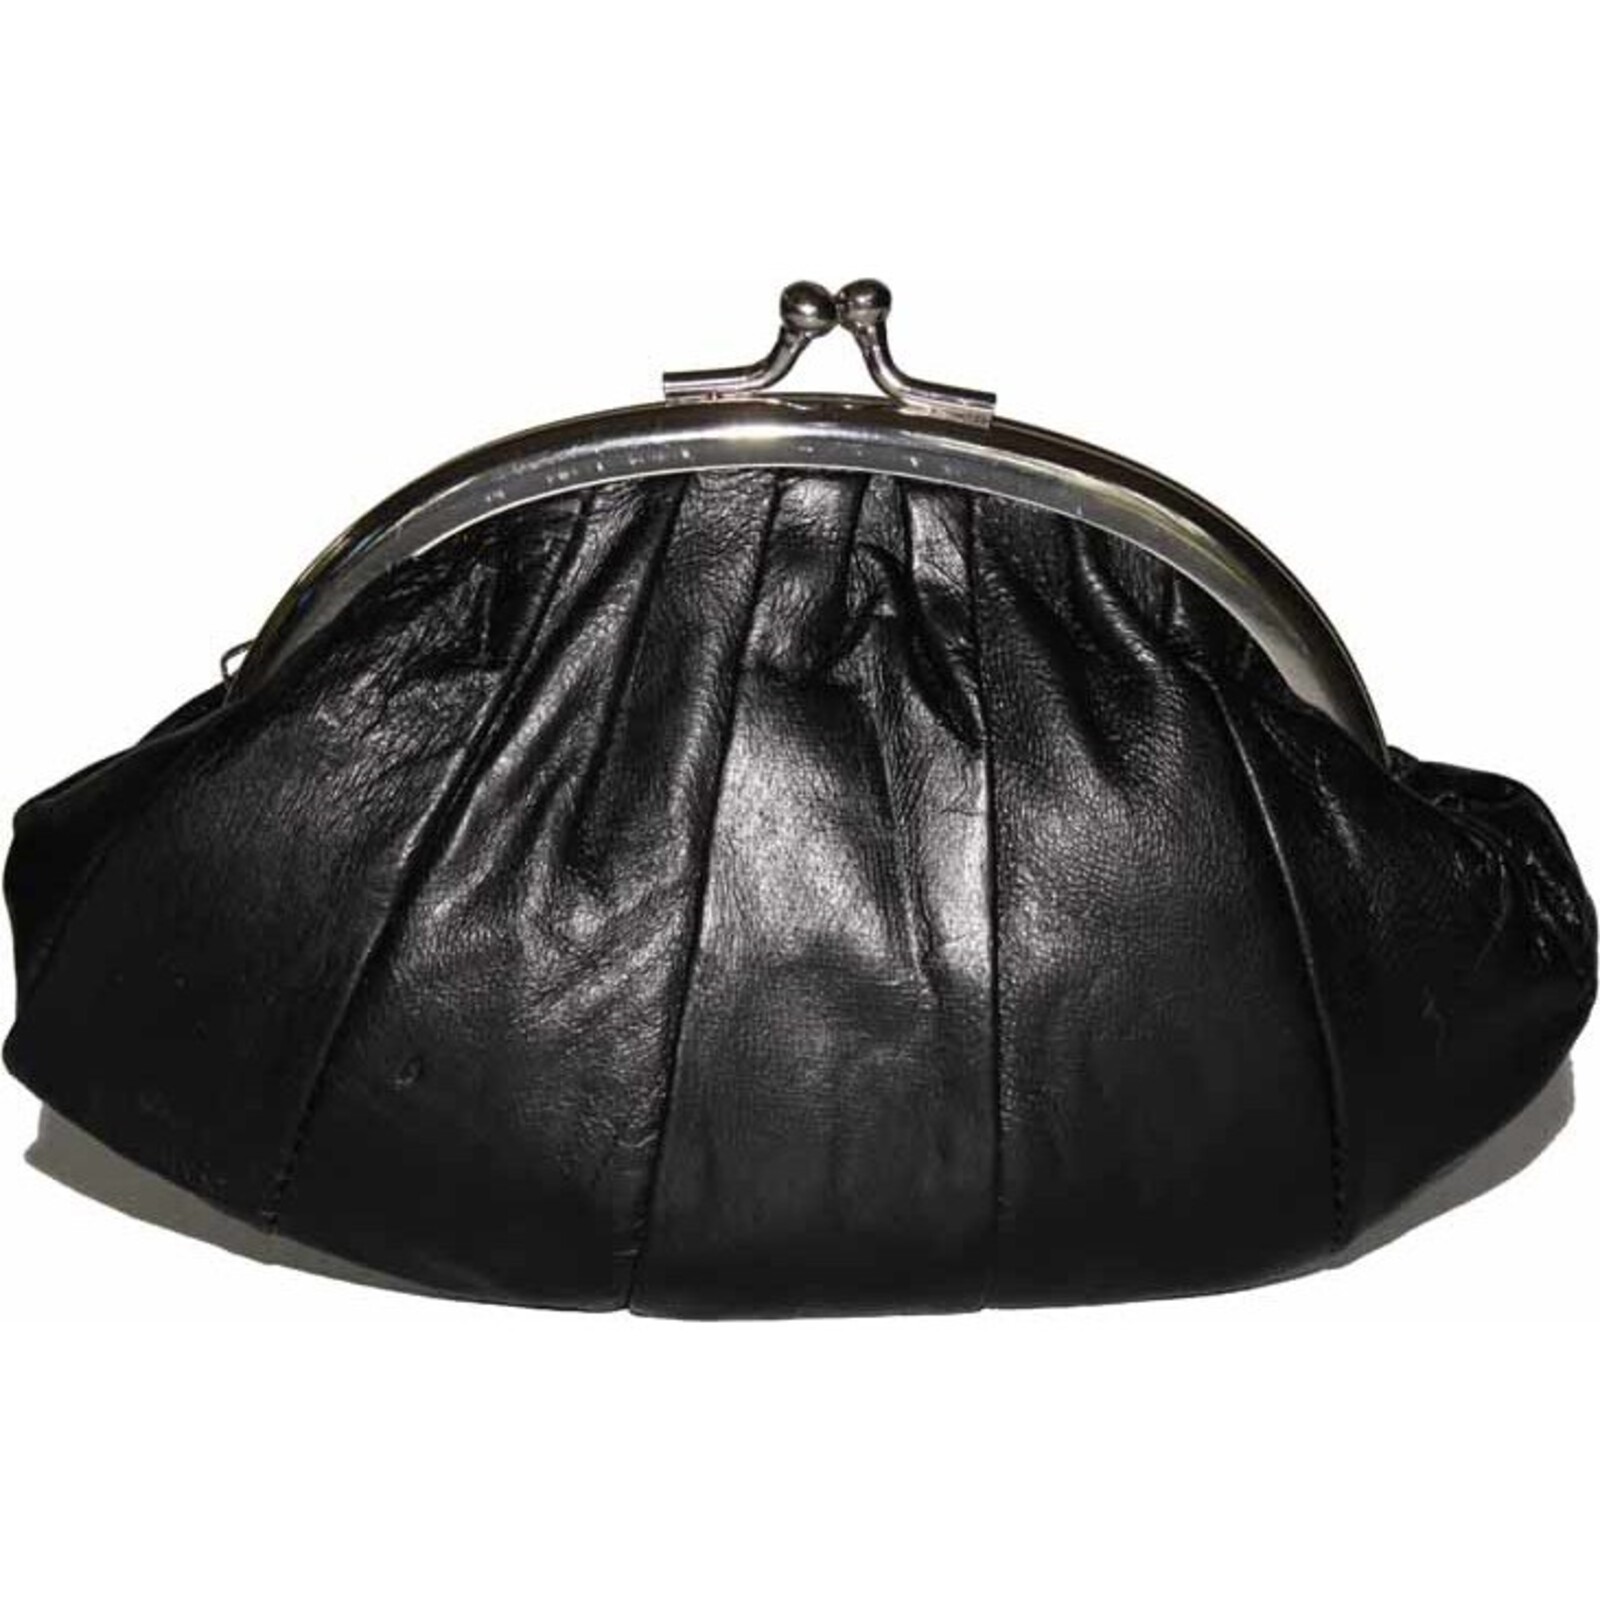 Leather Puff Purse - Black